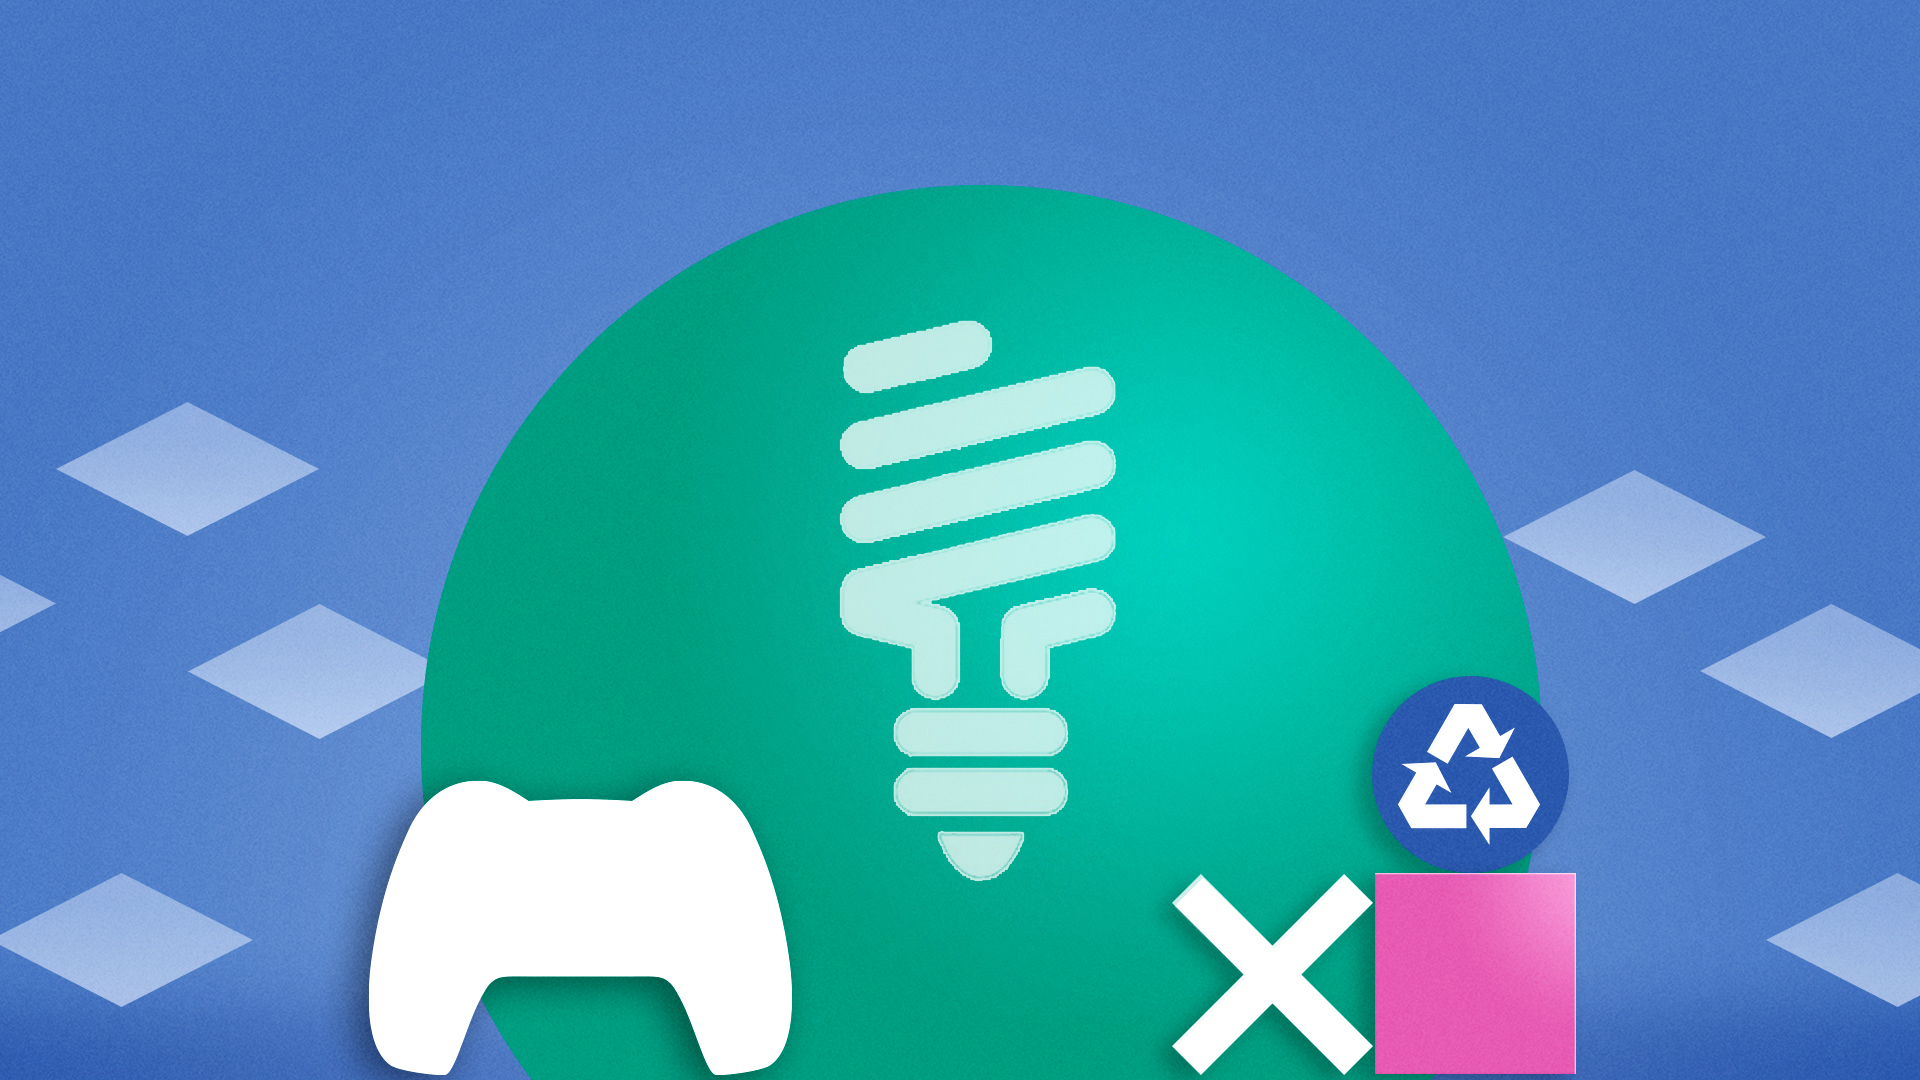 PlayStation PS5 Energy Efficiency symbols